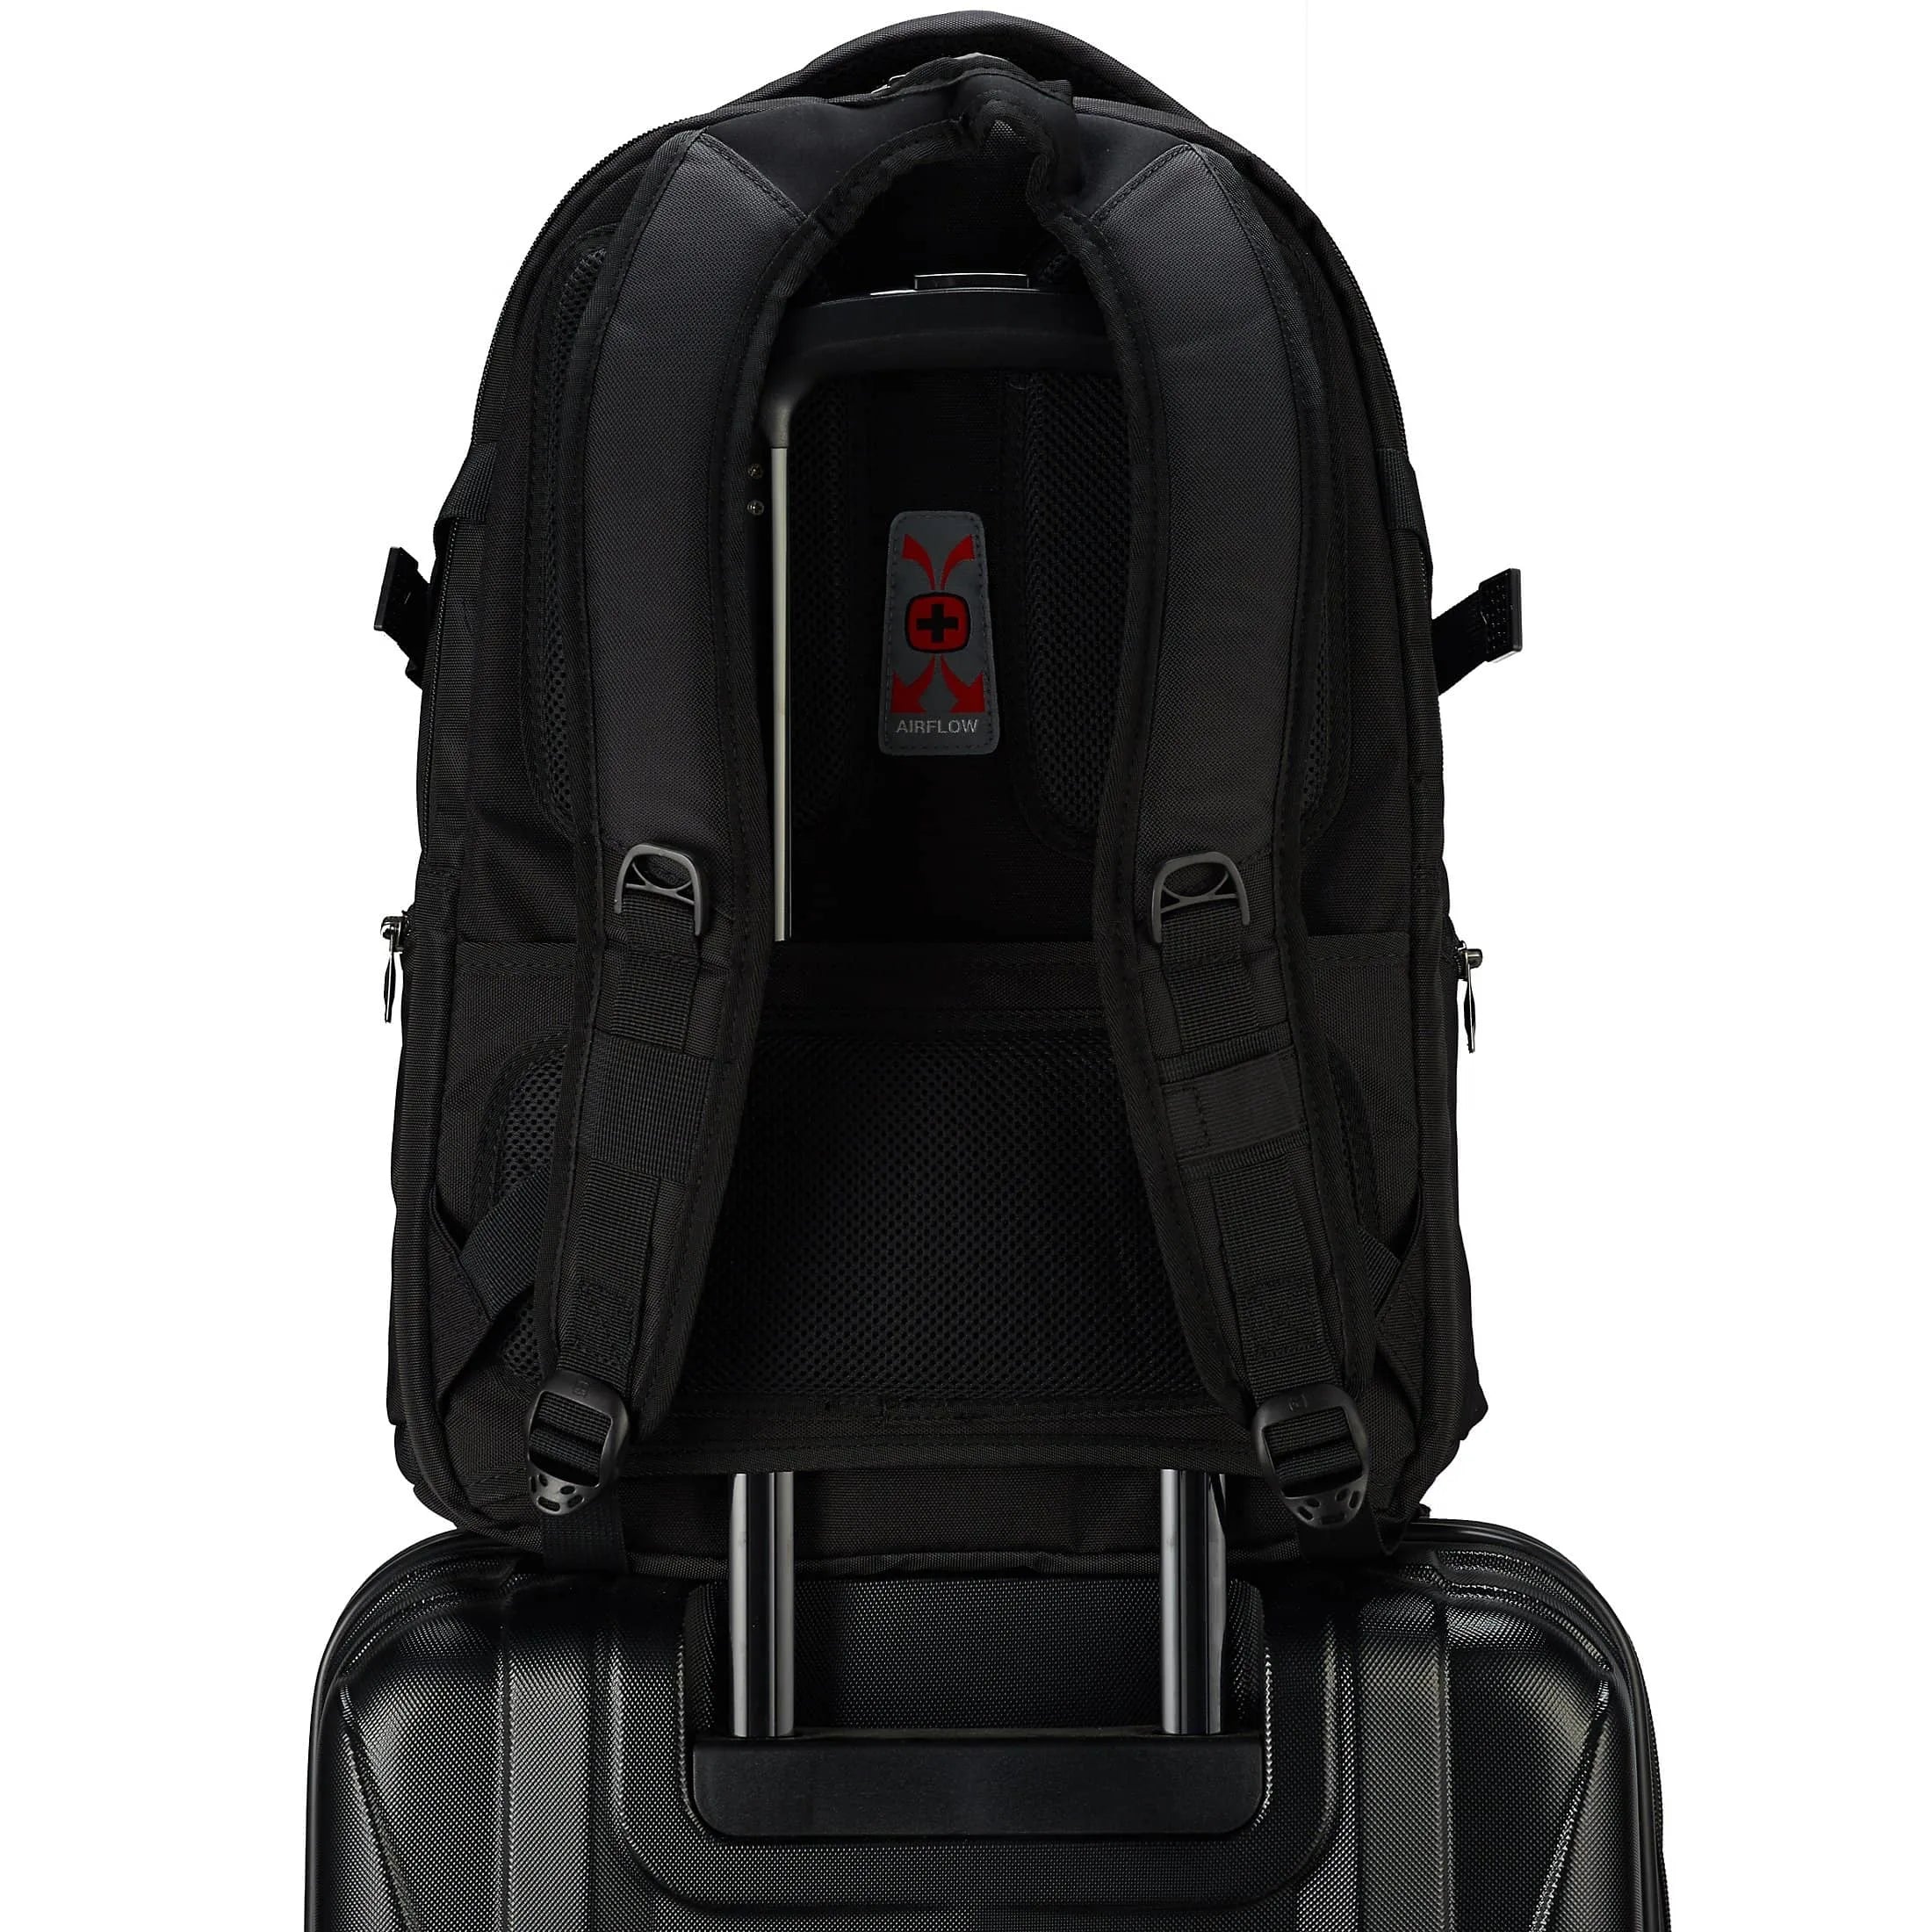 Wenger Business Transit Deluxe Laptop Backpack 46 cm - Black